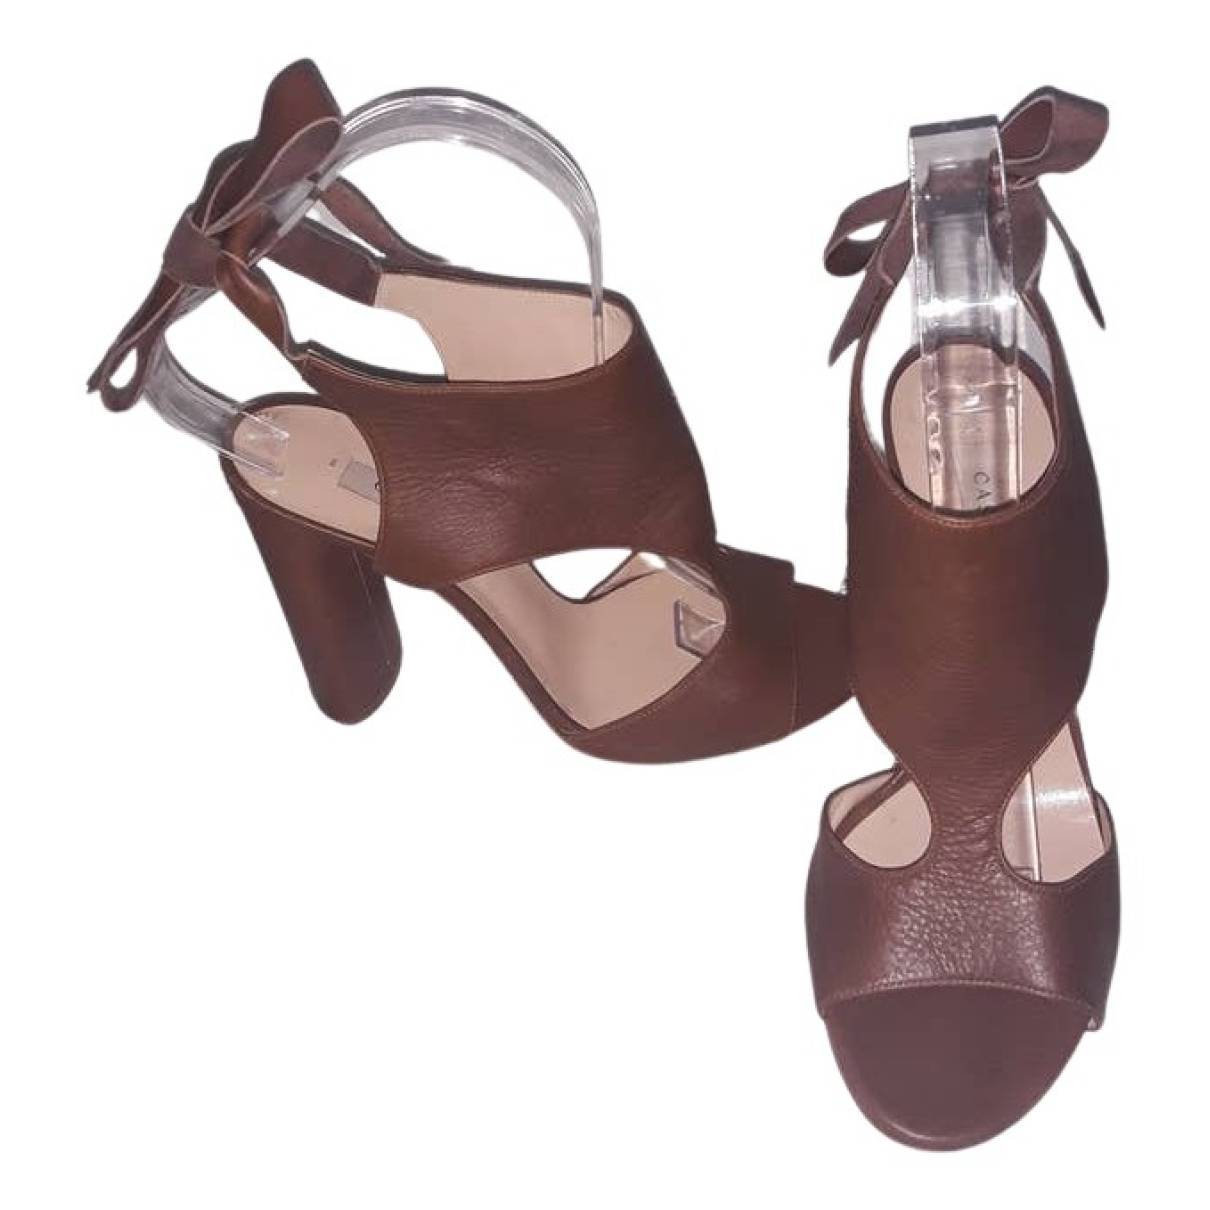 Patent leather sandal Casadei